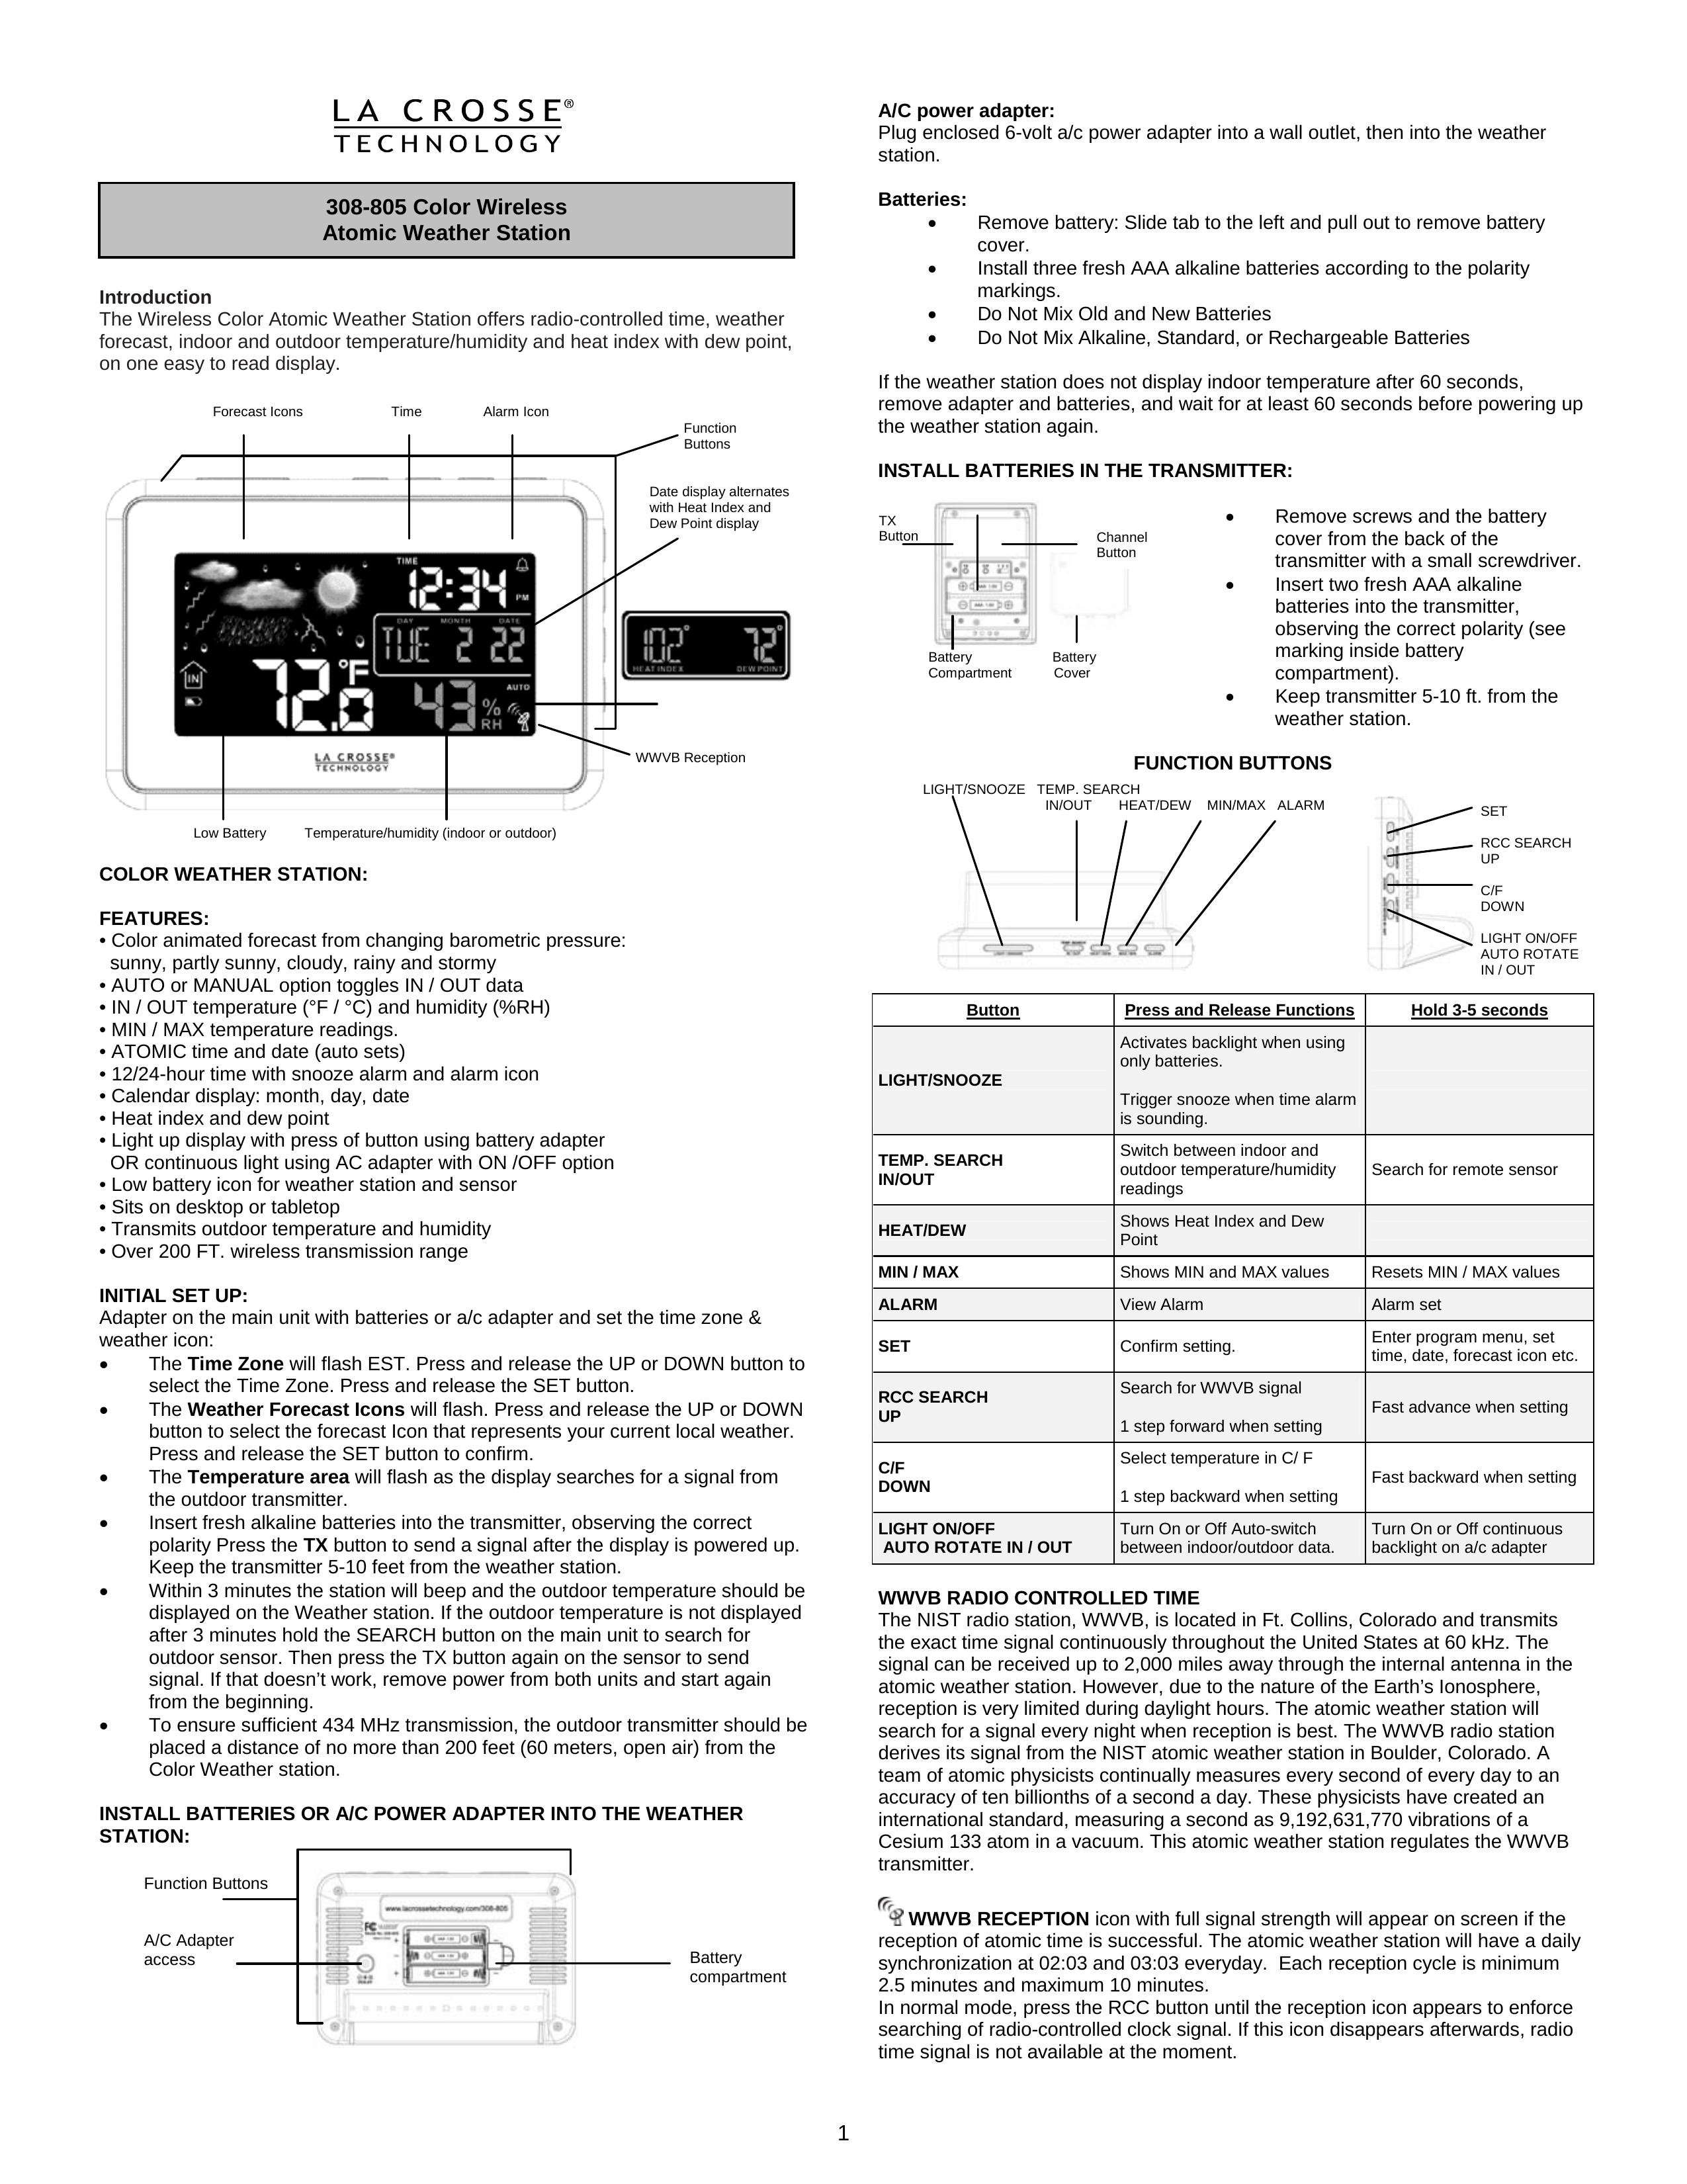 La Crosse Technology 308-805 Weather Radio User Manual